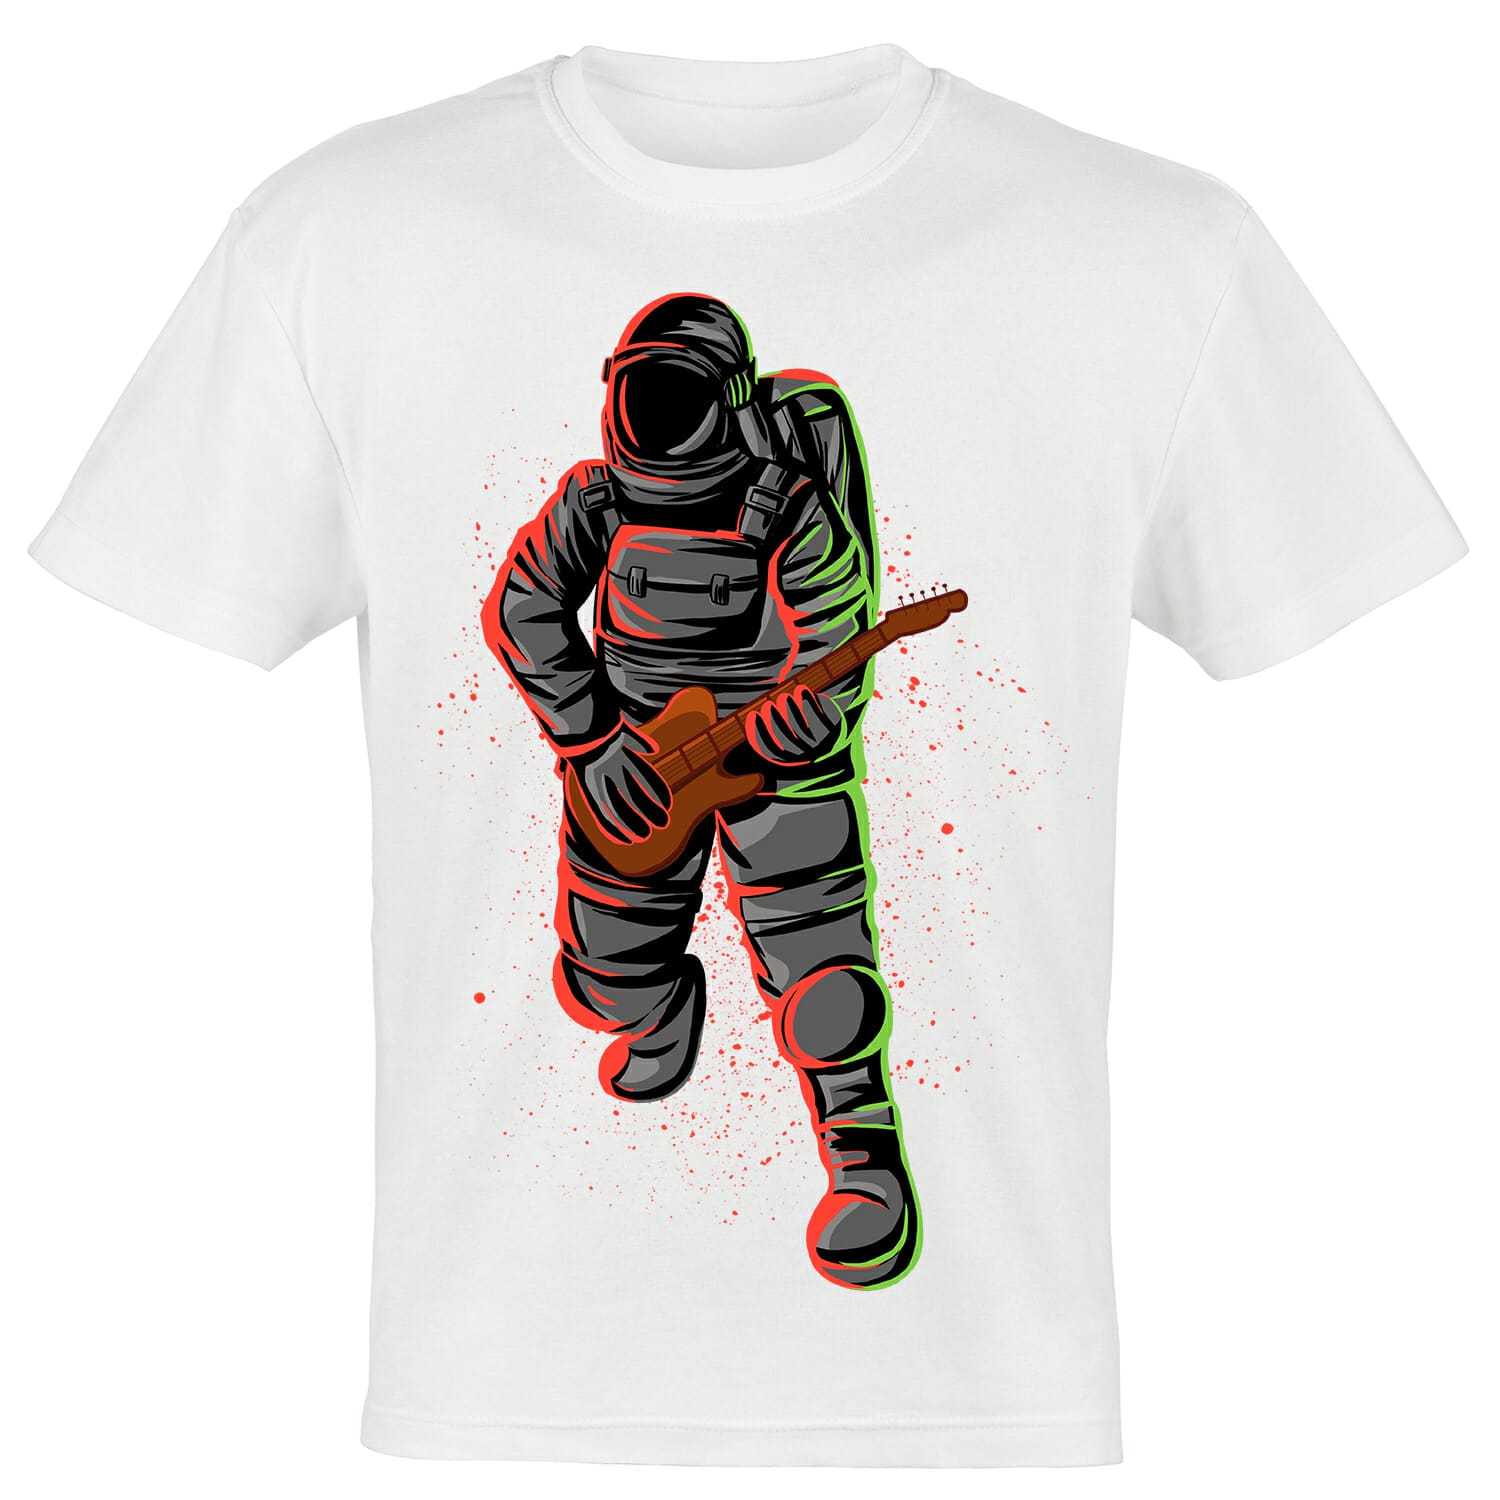 astronaut playing guitar tshirt design